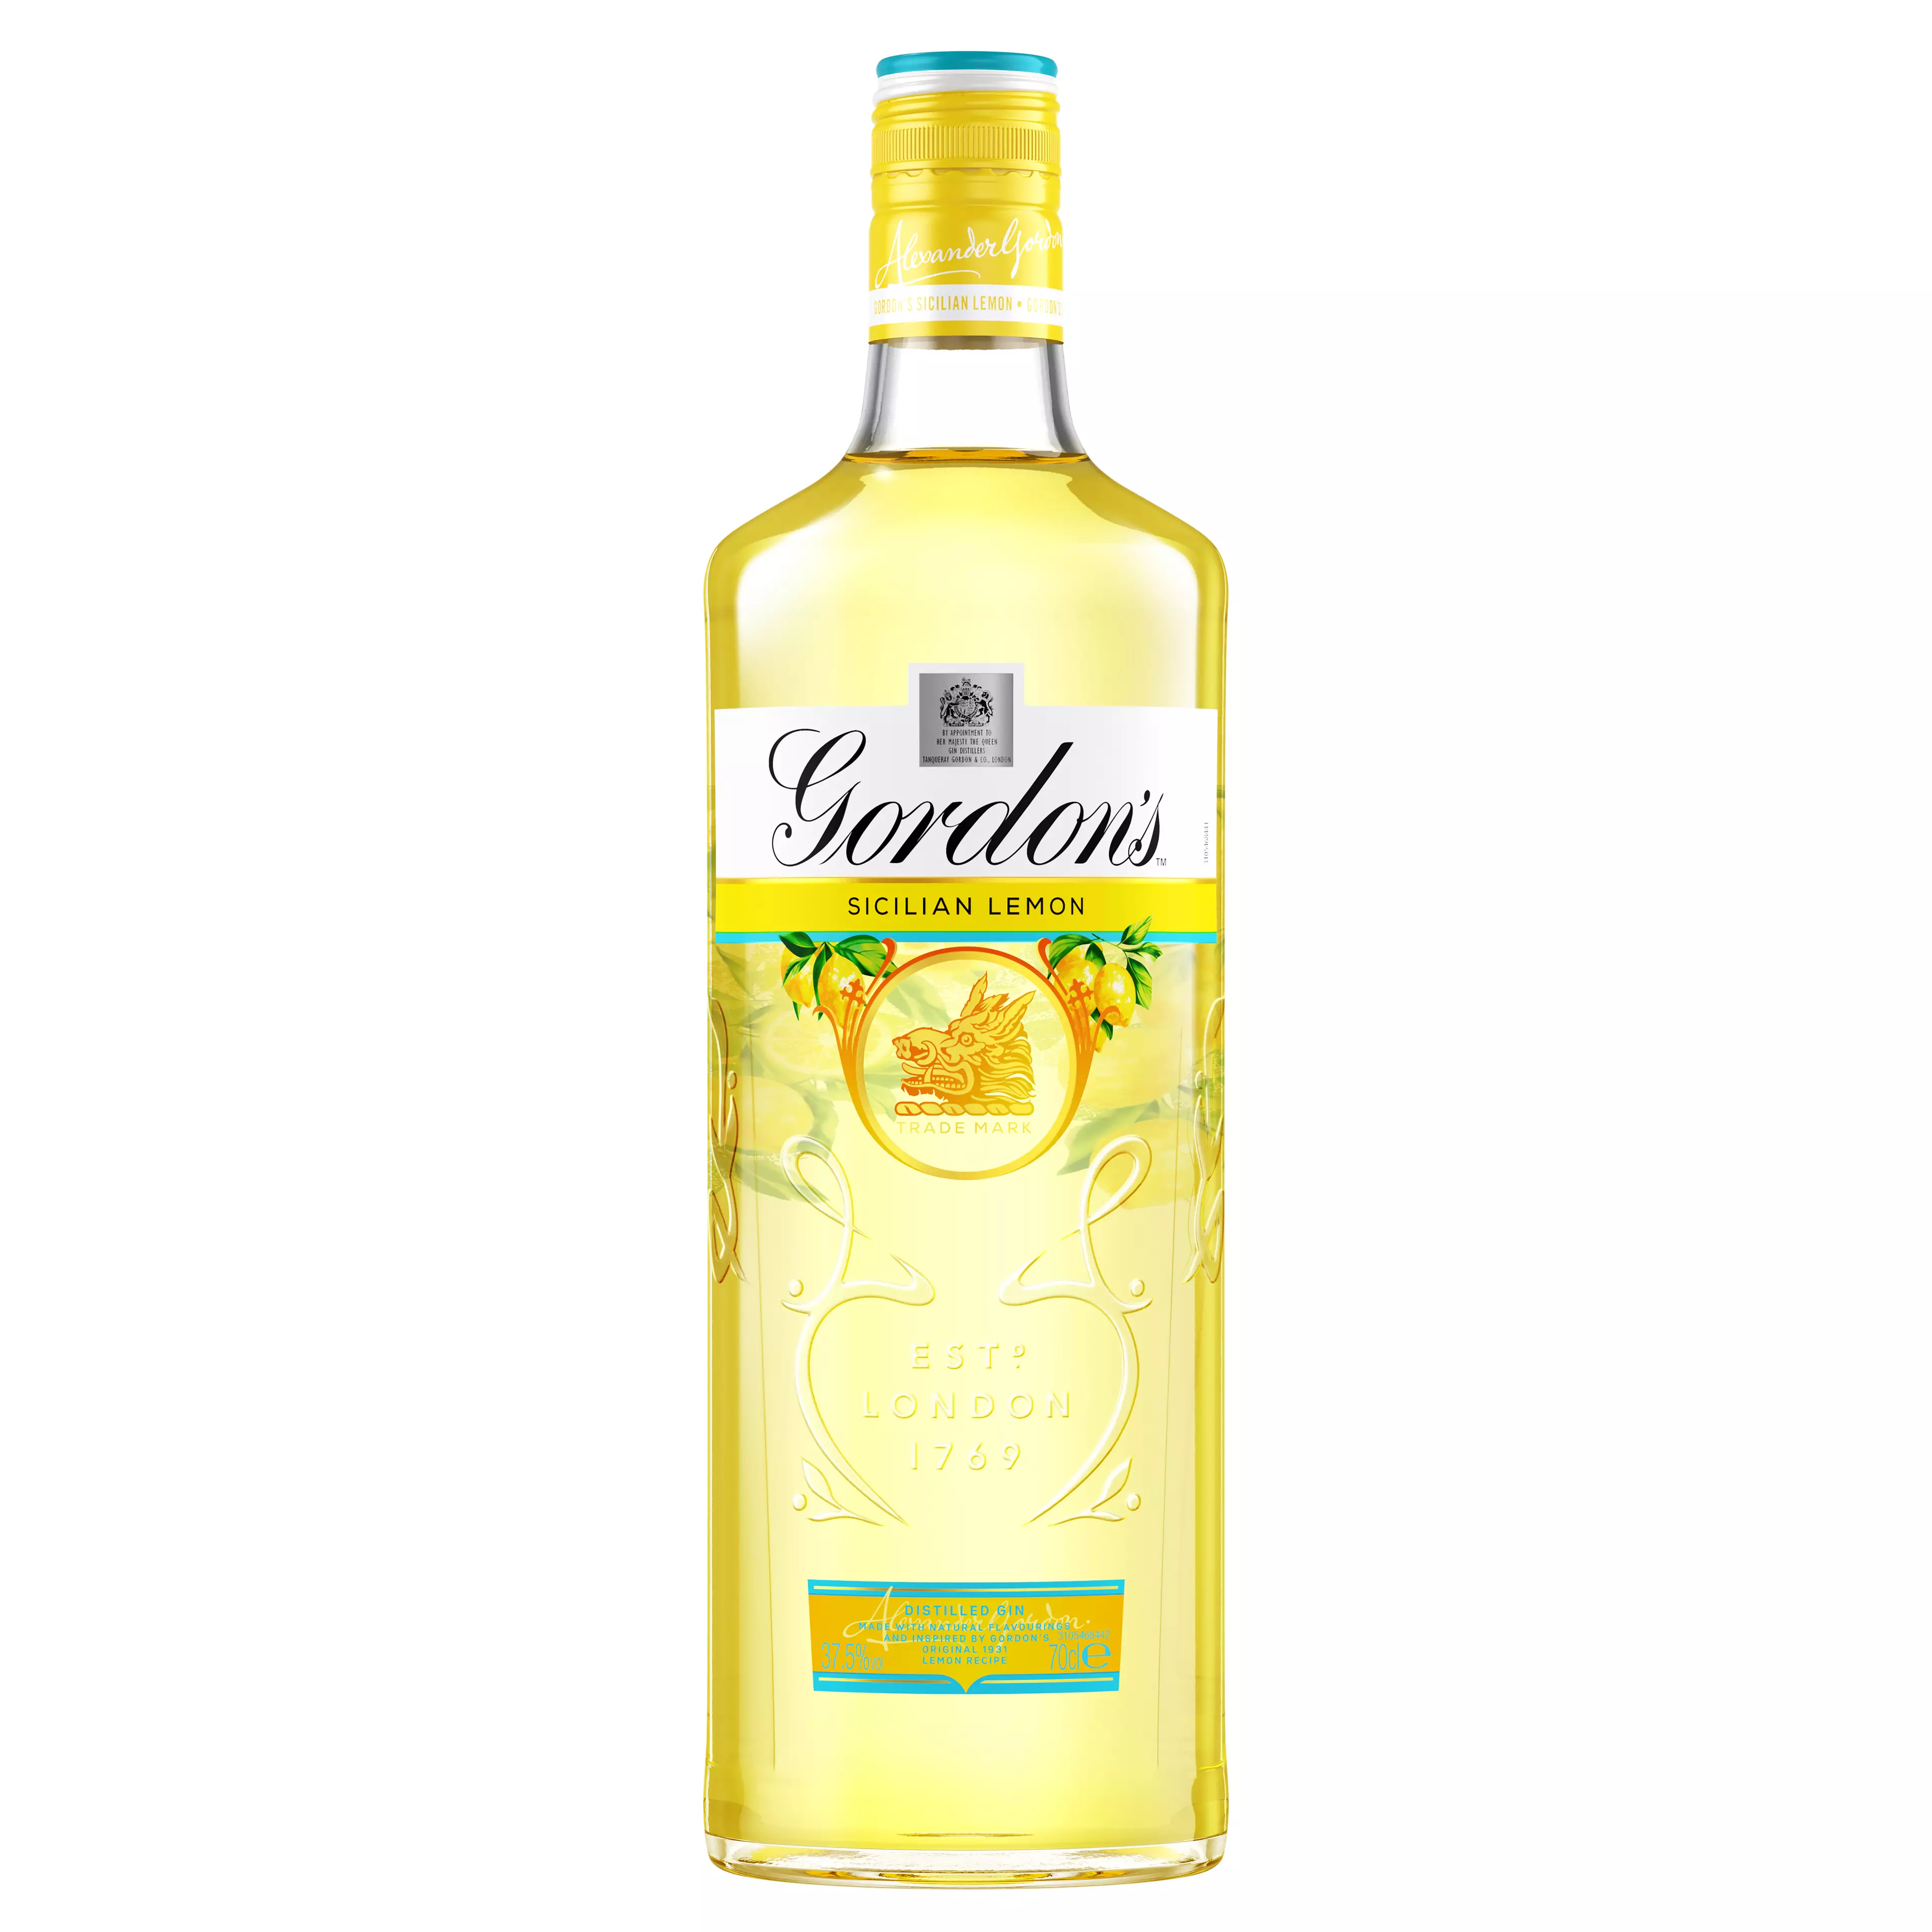 The Sicilian Lemon flavour sounds the ultimate summertime tipple (